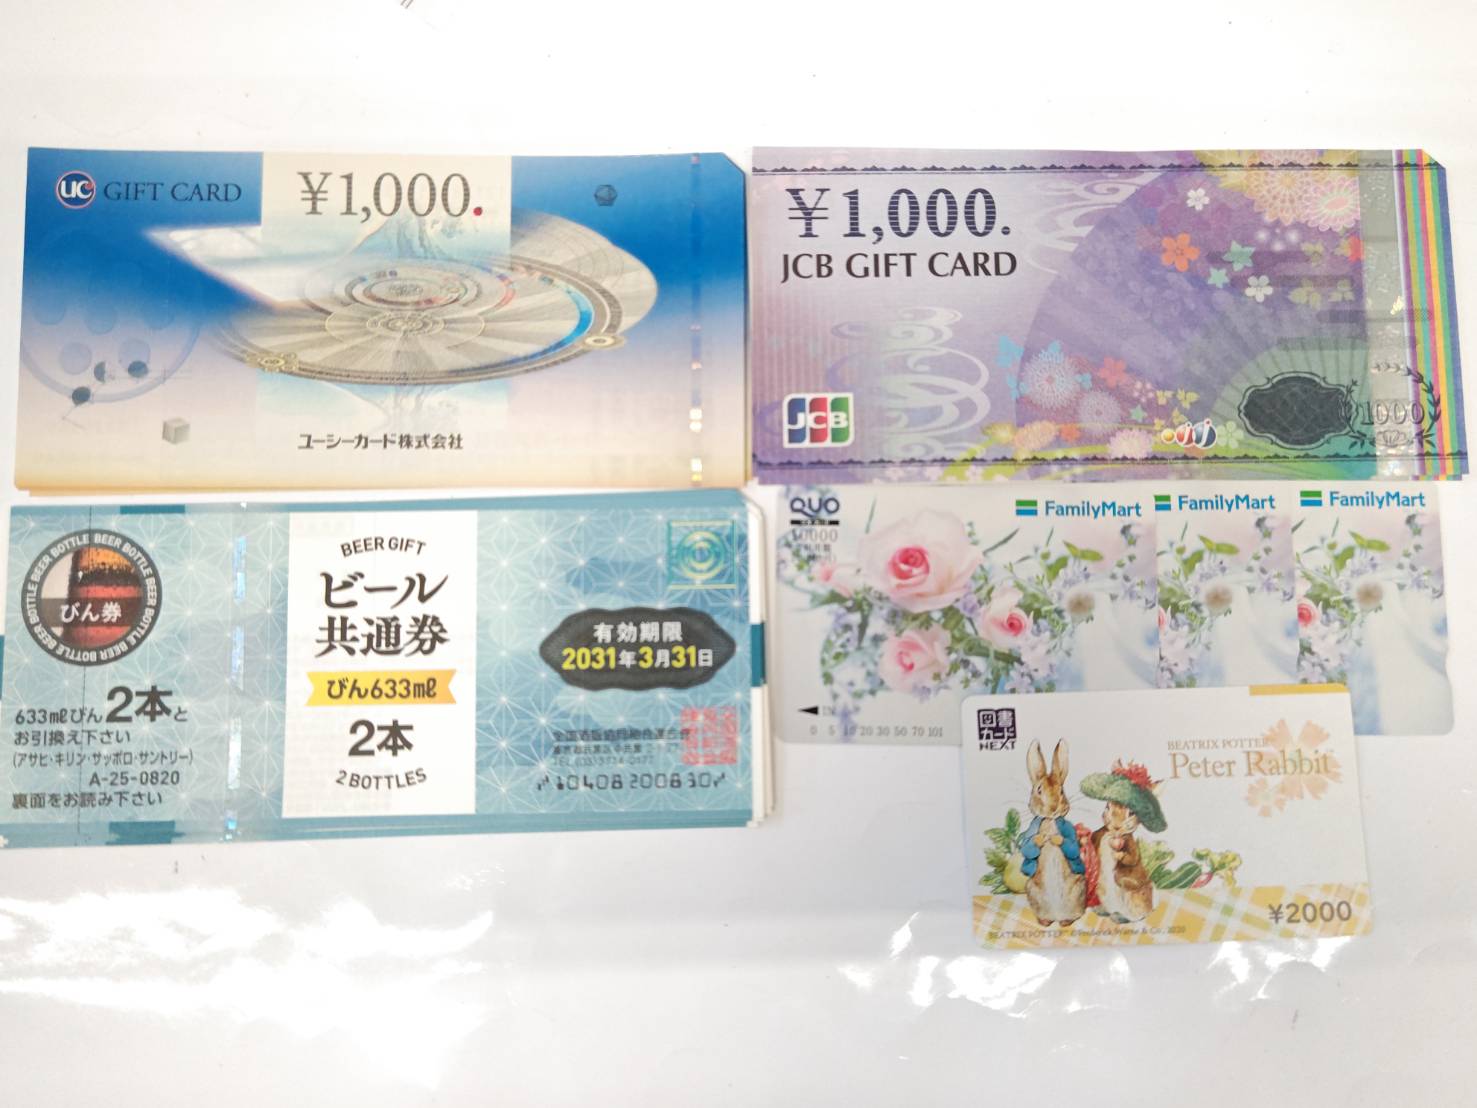 JCB GIFT、びゅう、三井住友カード 商品券ミックス 8000円分 - ギフト券